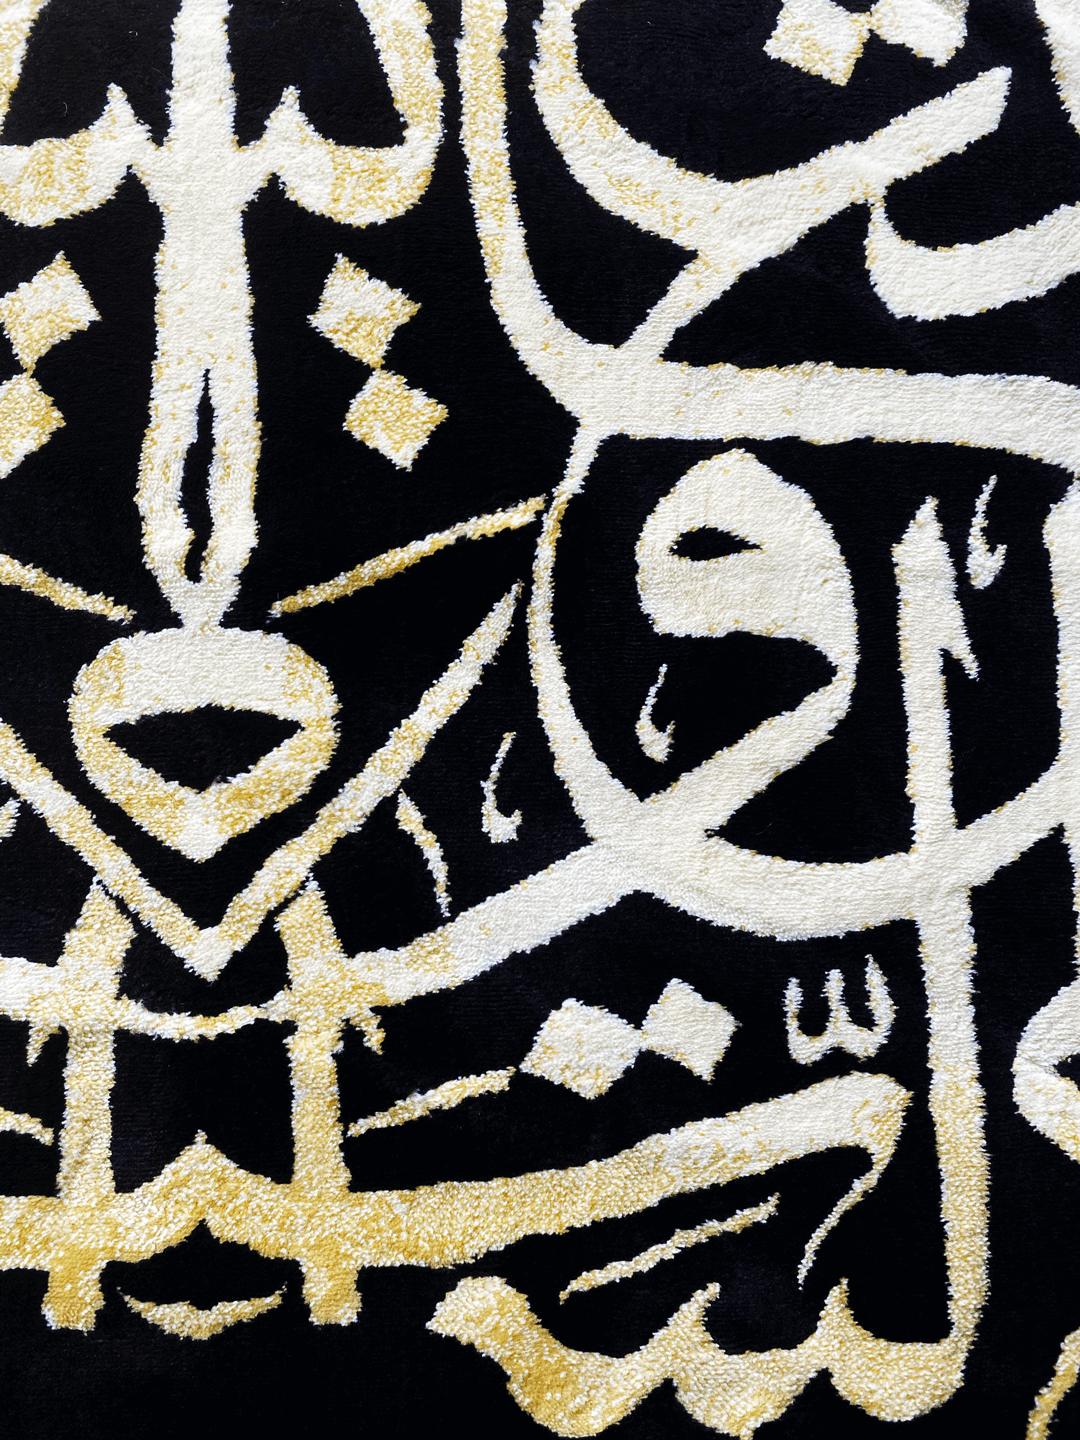 Black Kaaba Calligraphy - Made in Medina Musallah